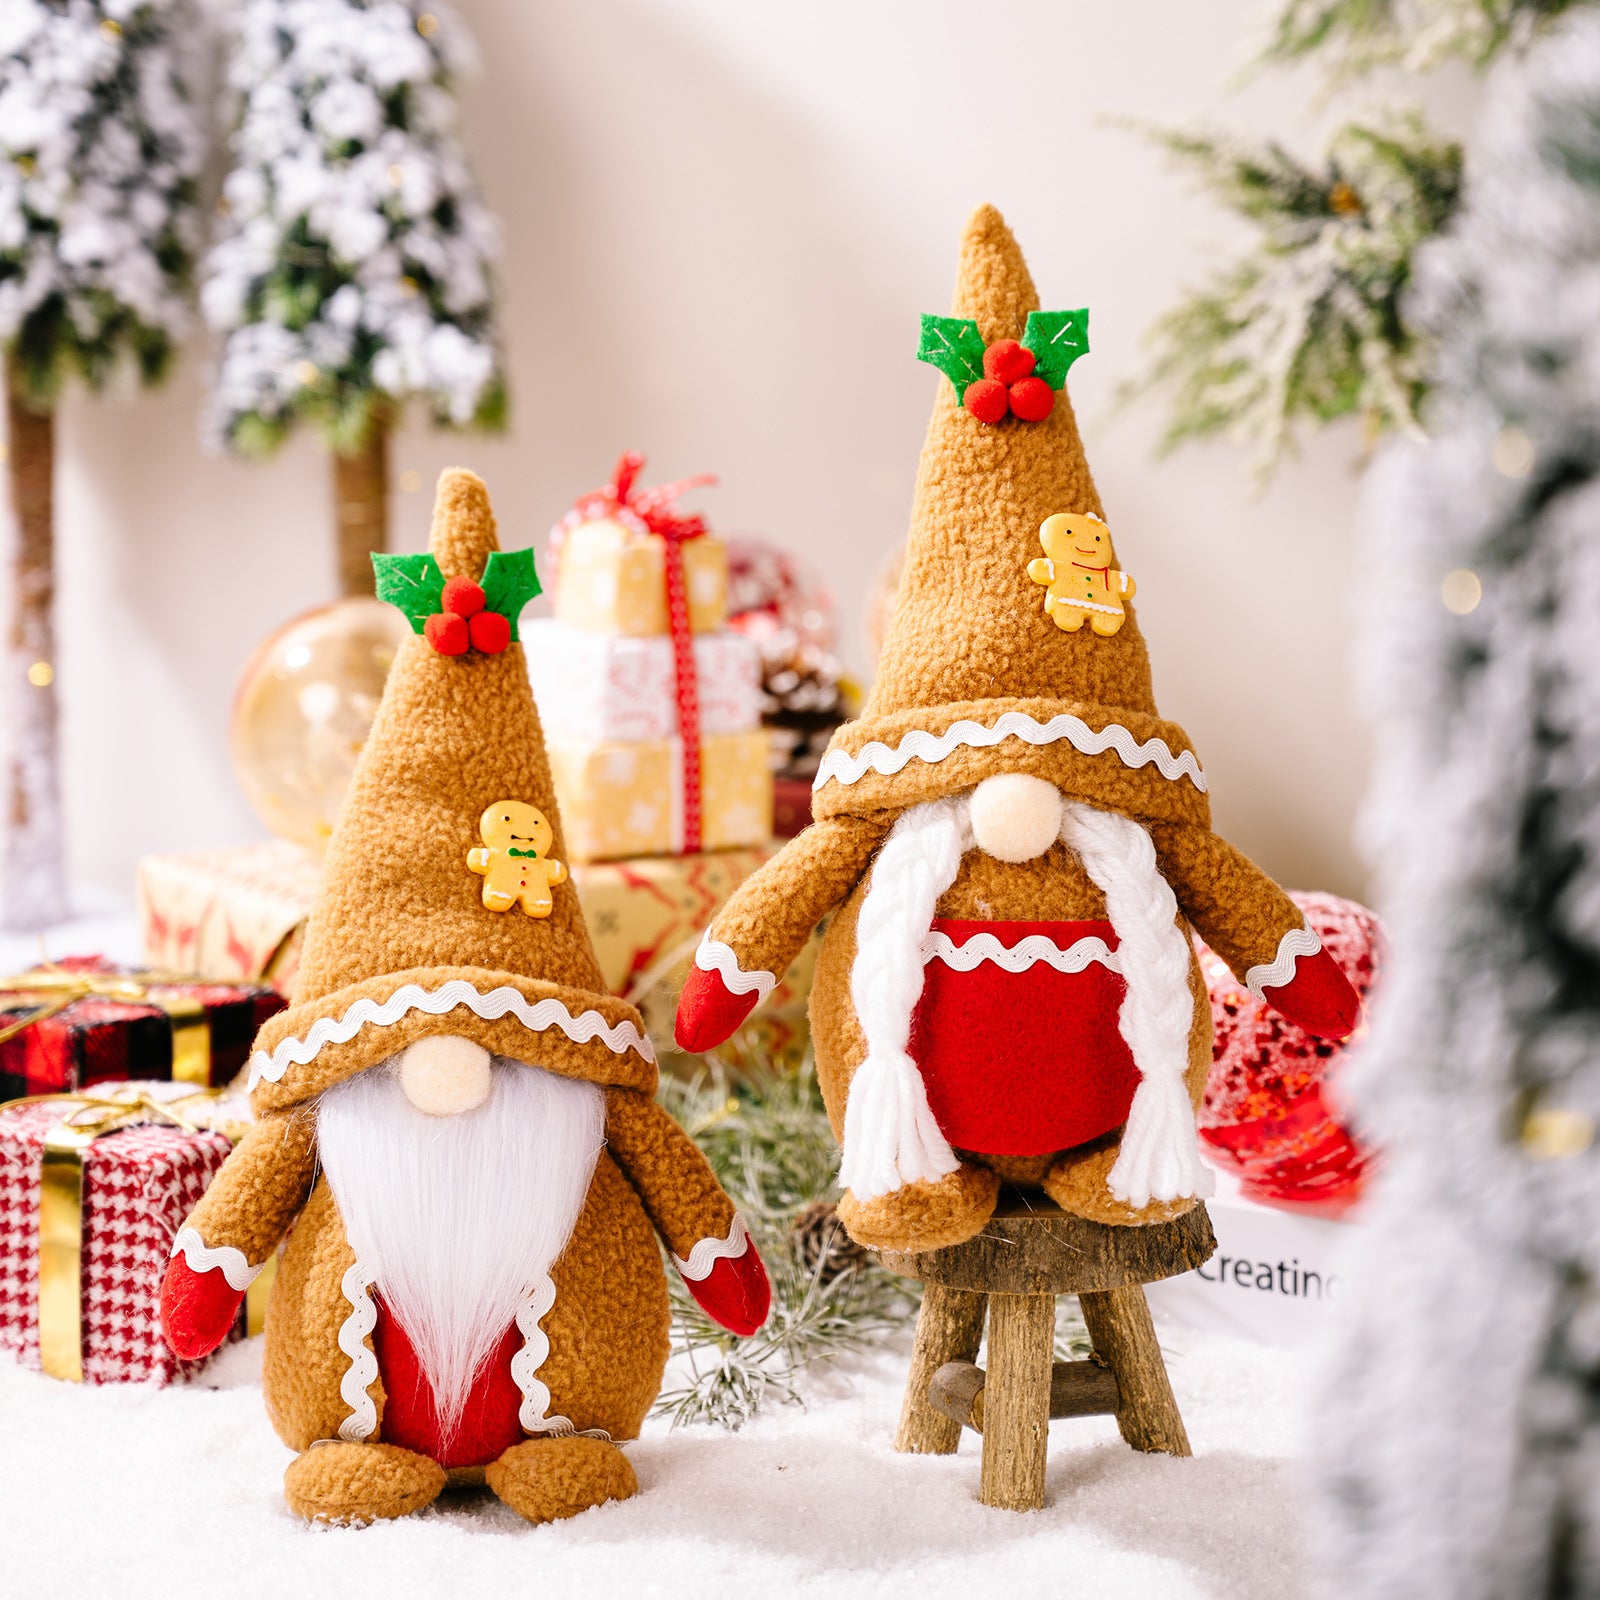 Khaki Gingerbread Man Knitted Doll Ornaments